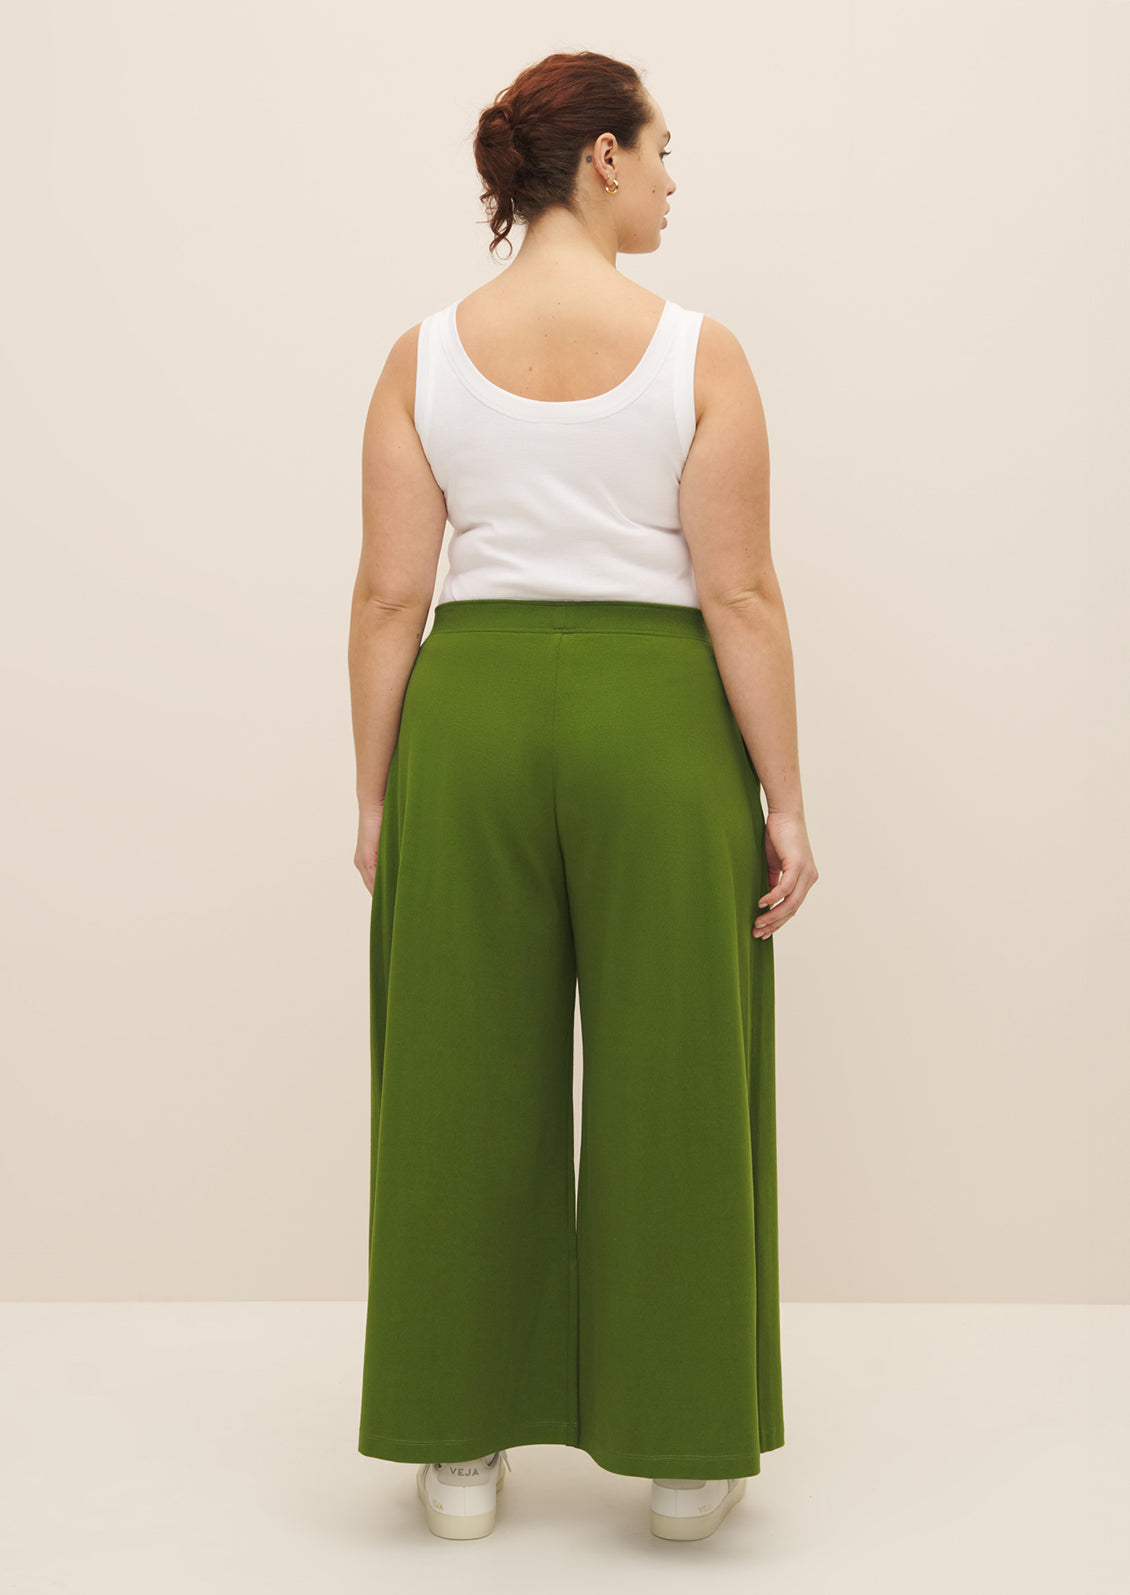 A woman wearing a pair of flowy, wide leg green pants.